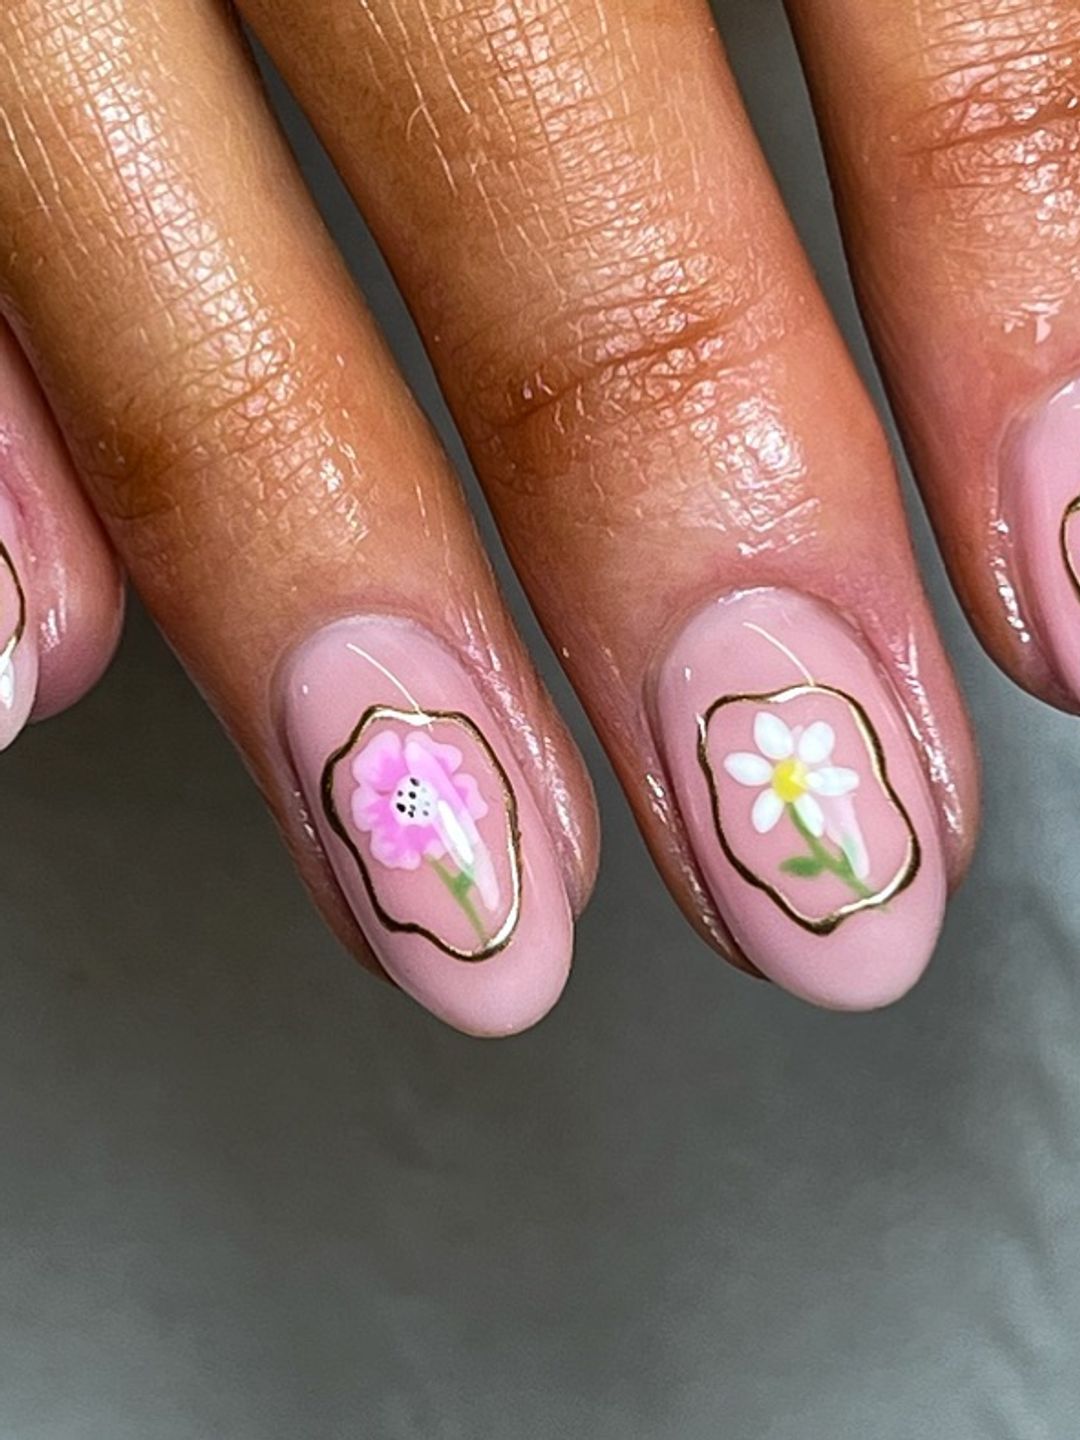 Floral nails 